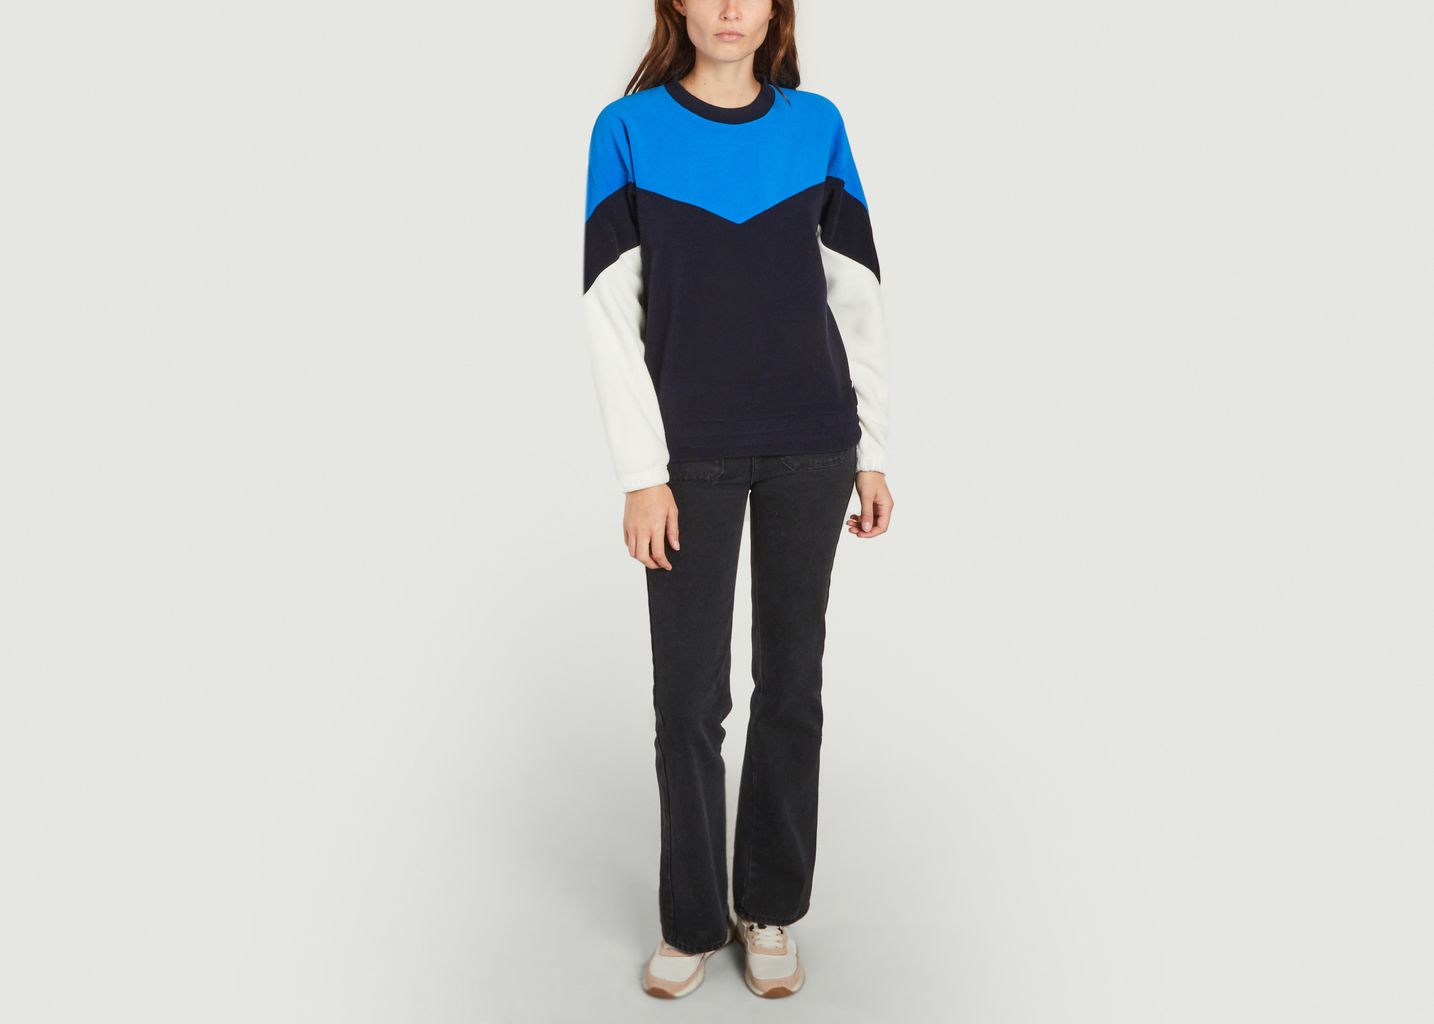 Joan Polar Sweater - French Disorder